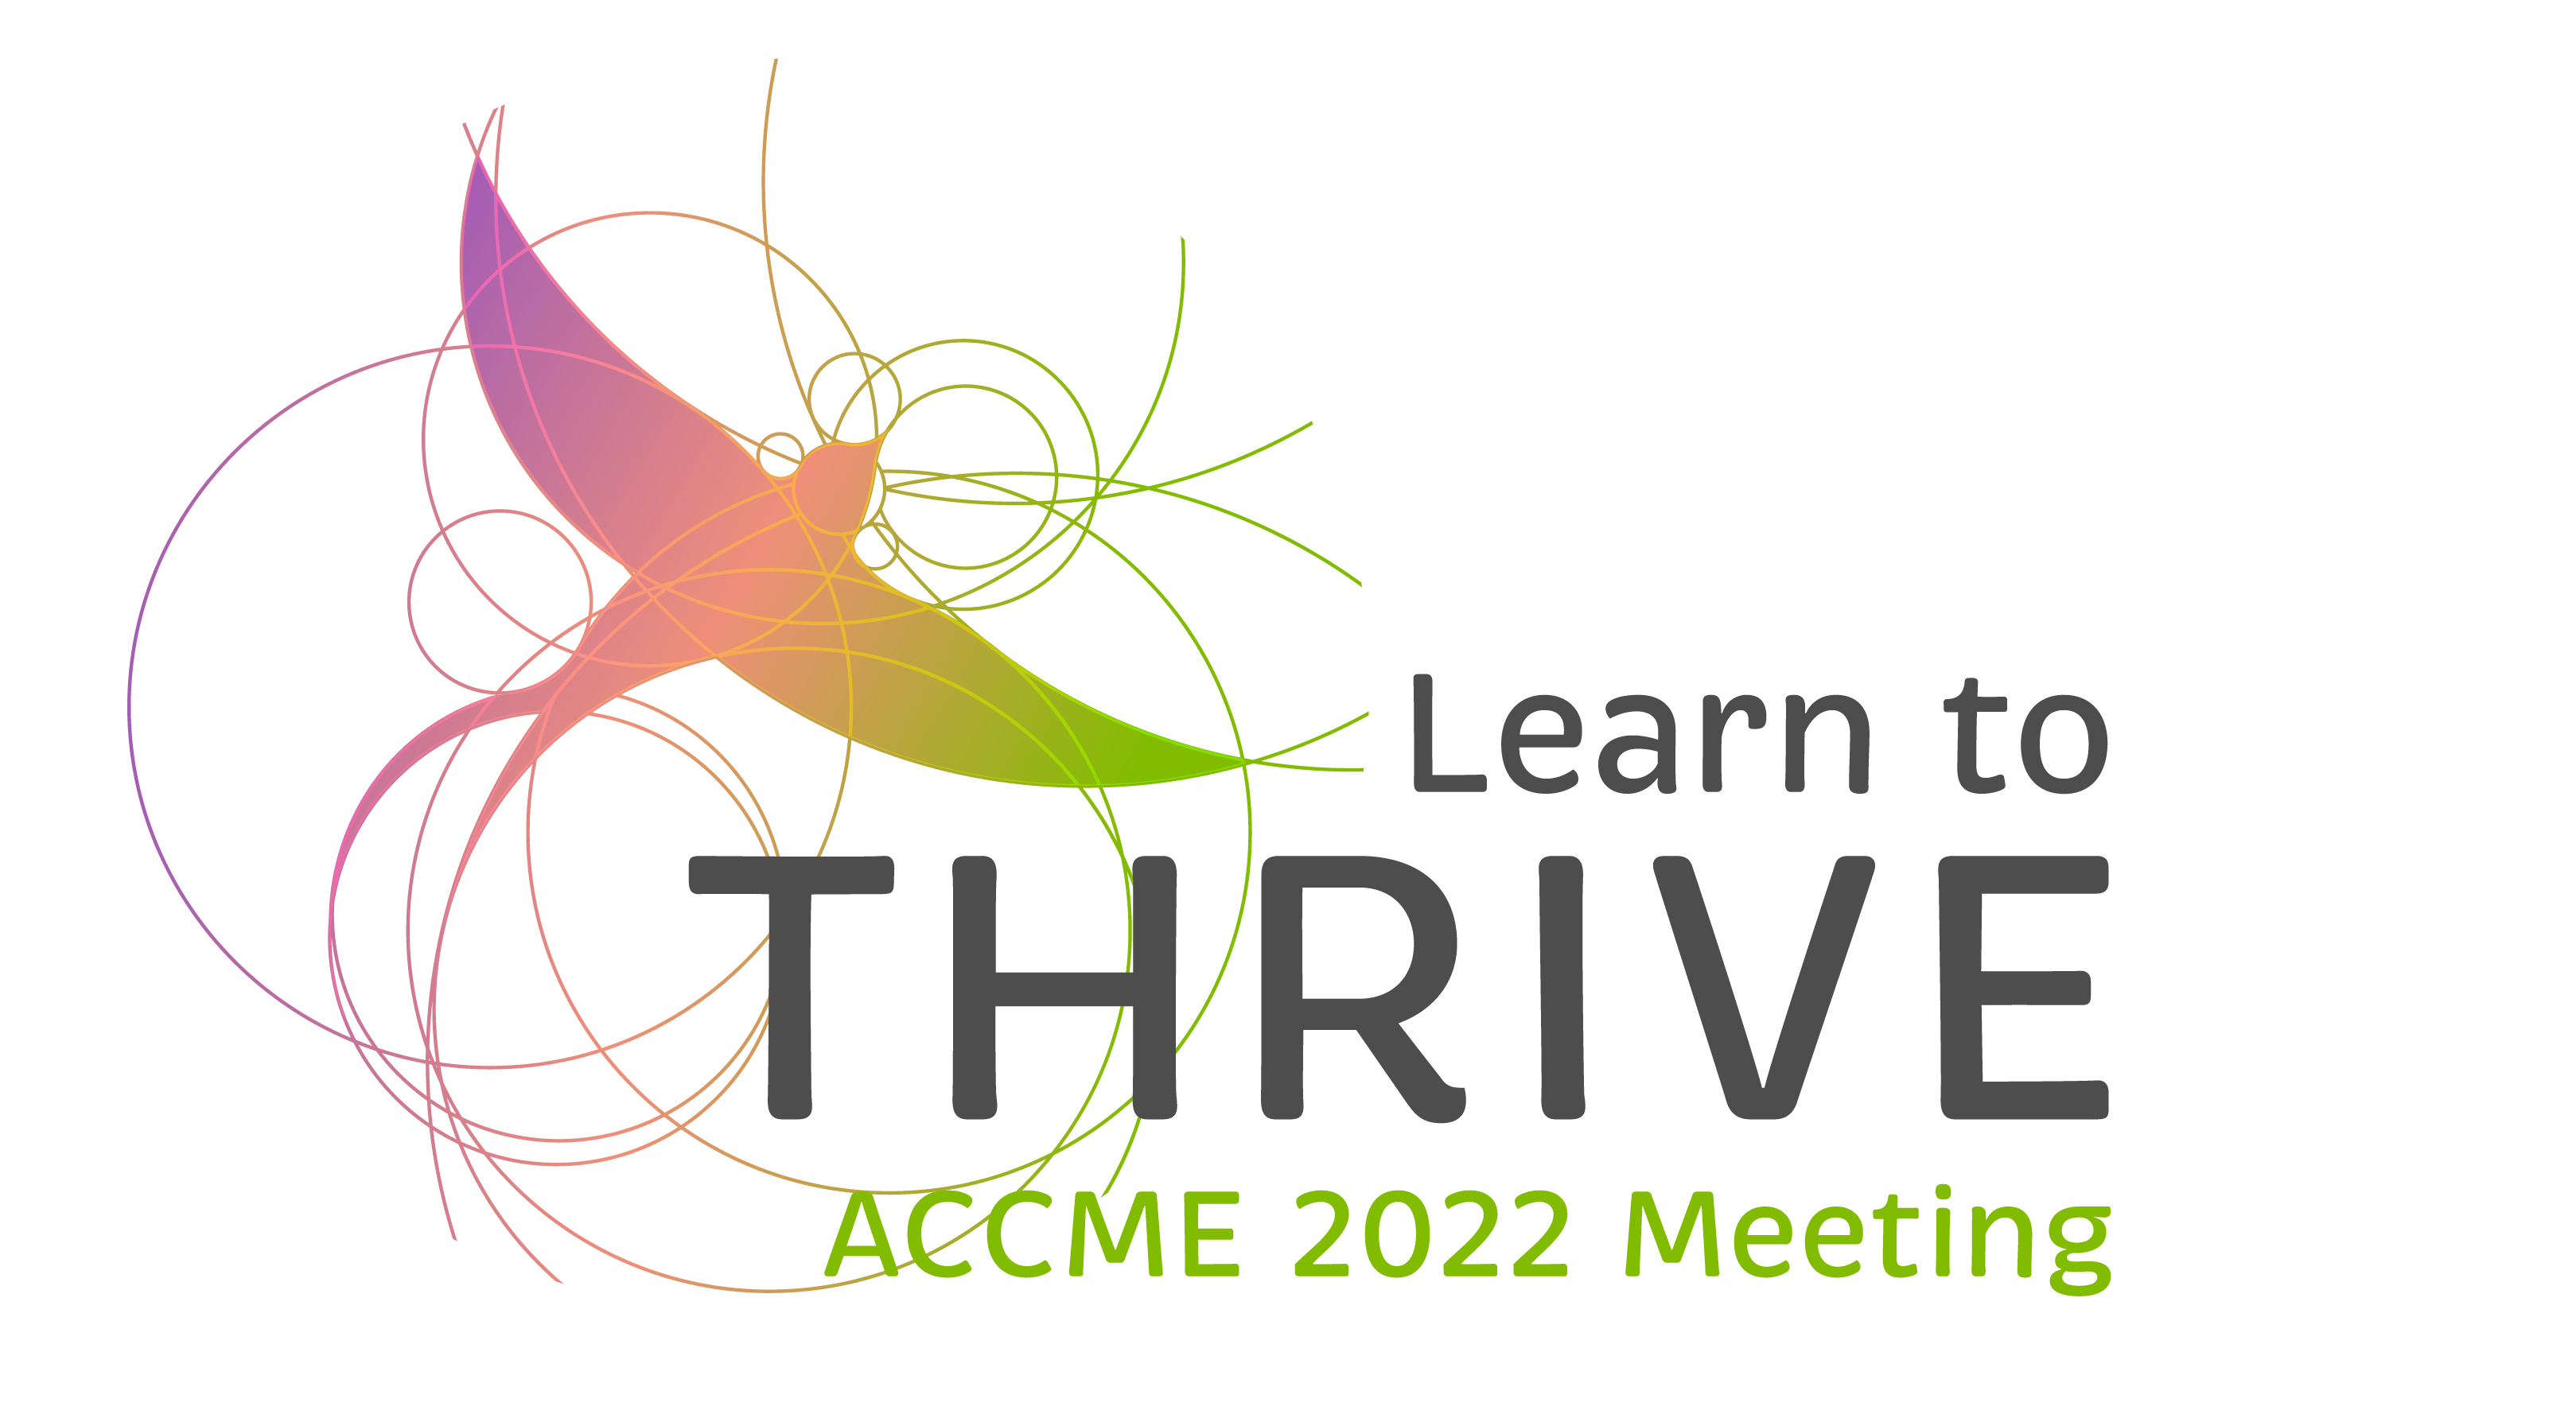 accme 2022 meeting logo